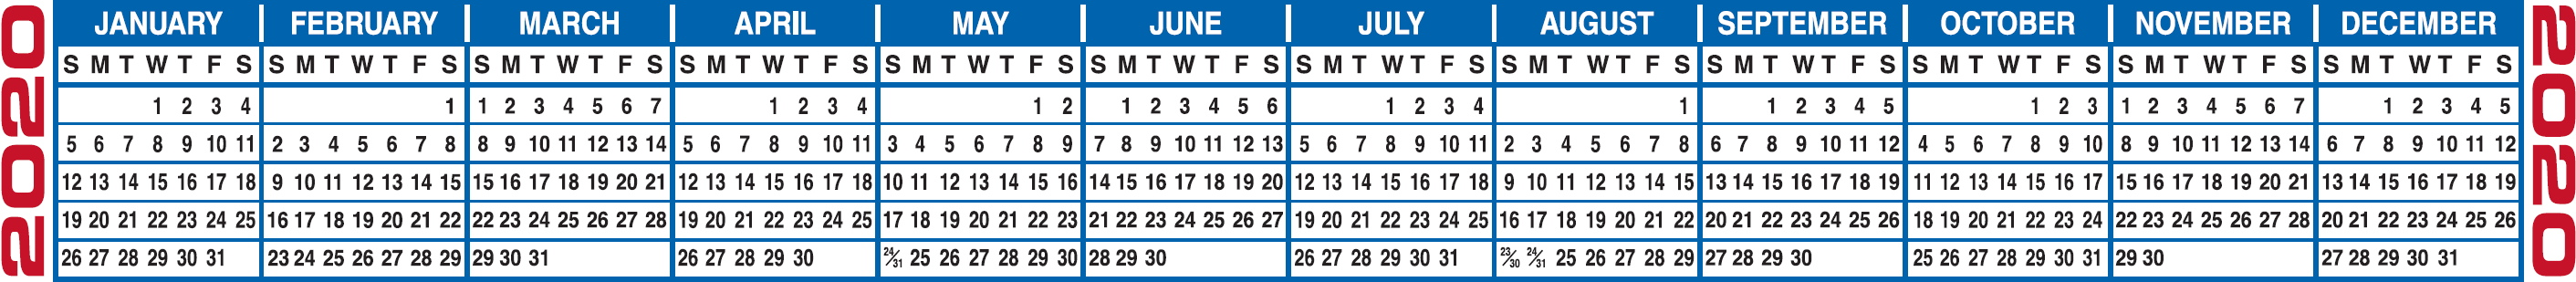 FREE Printable 2021 Calendars & 2021 Calendar Strips